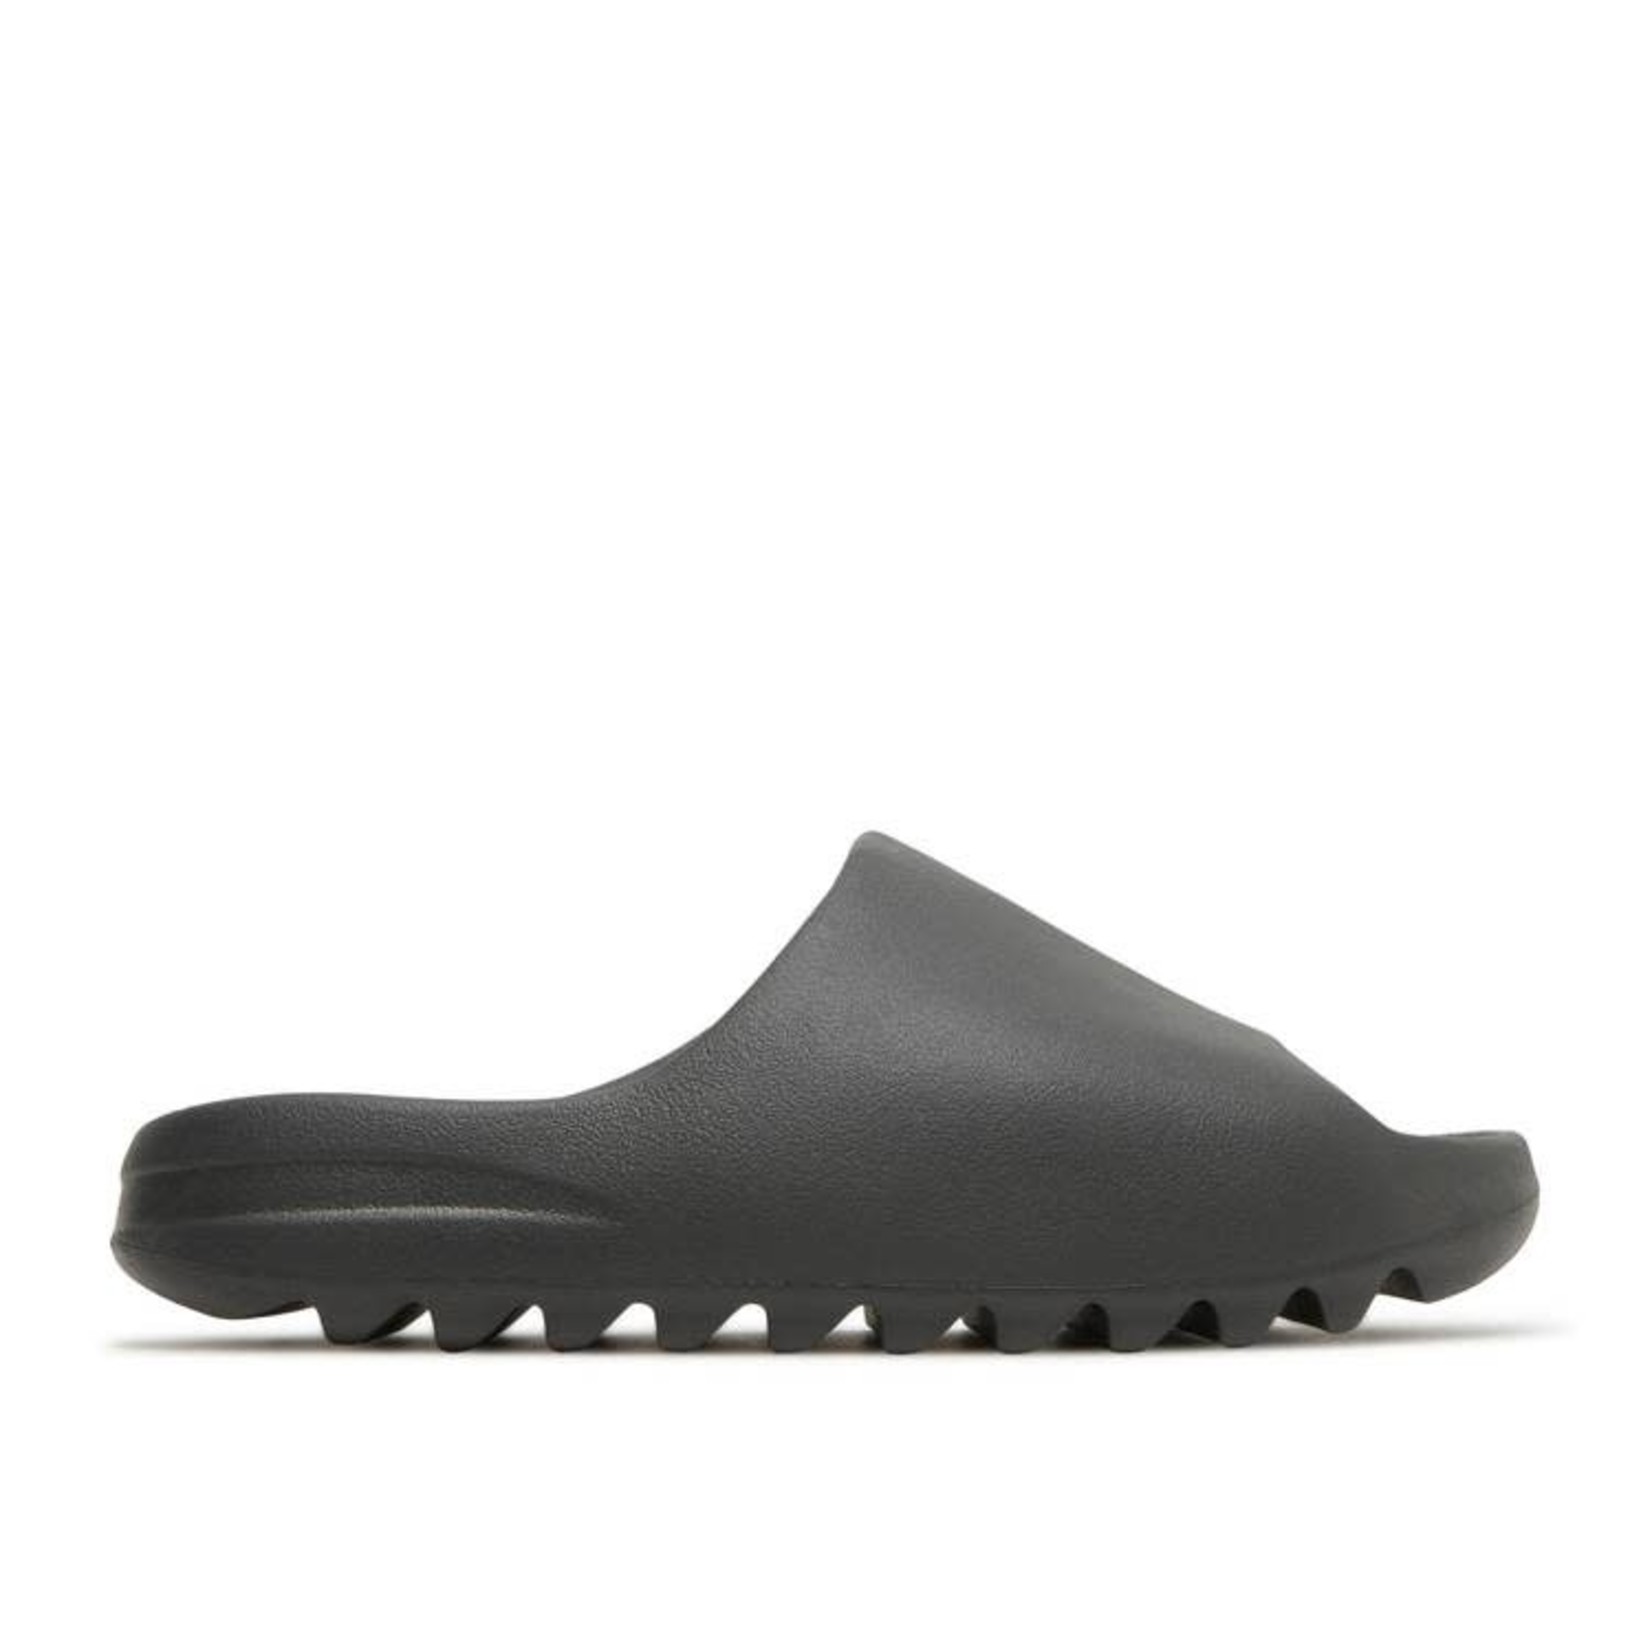 Adidas Adidas Yeezy Slide Onyx Size 9, DS BRAND NEW - SoleSeattle